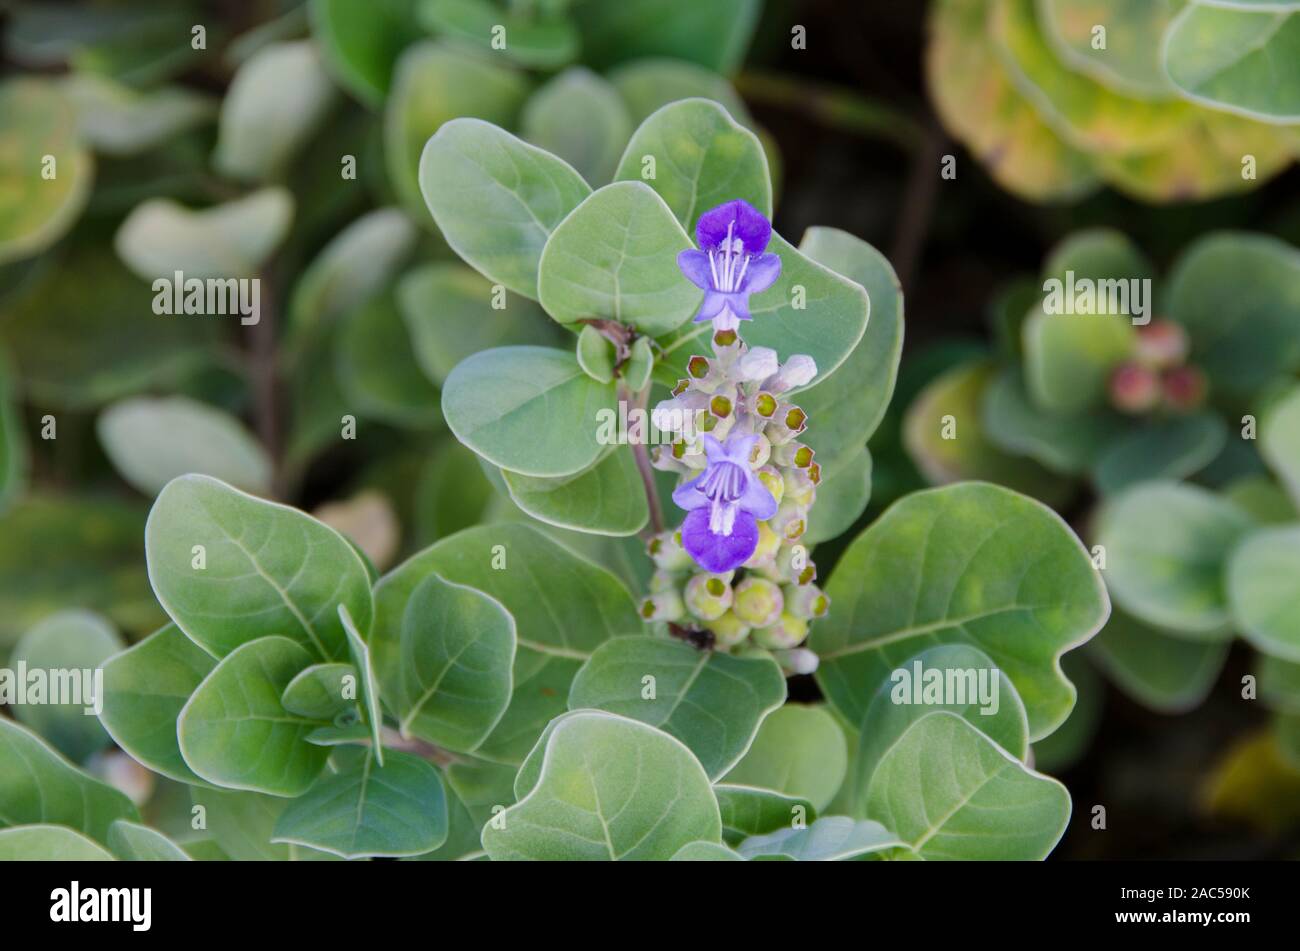 The native Hawaiian plant Pohinahina has bell-shaped flowers with blue violet petals. Stock Photo